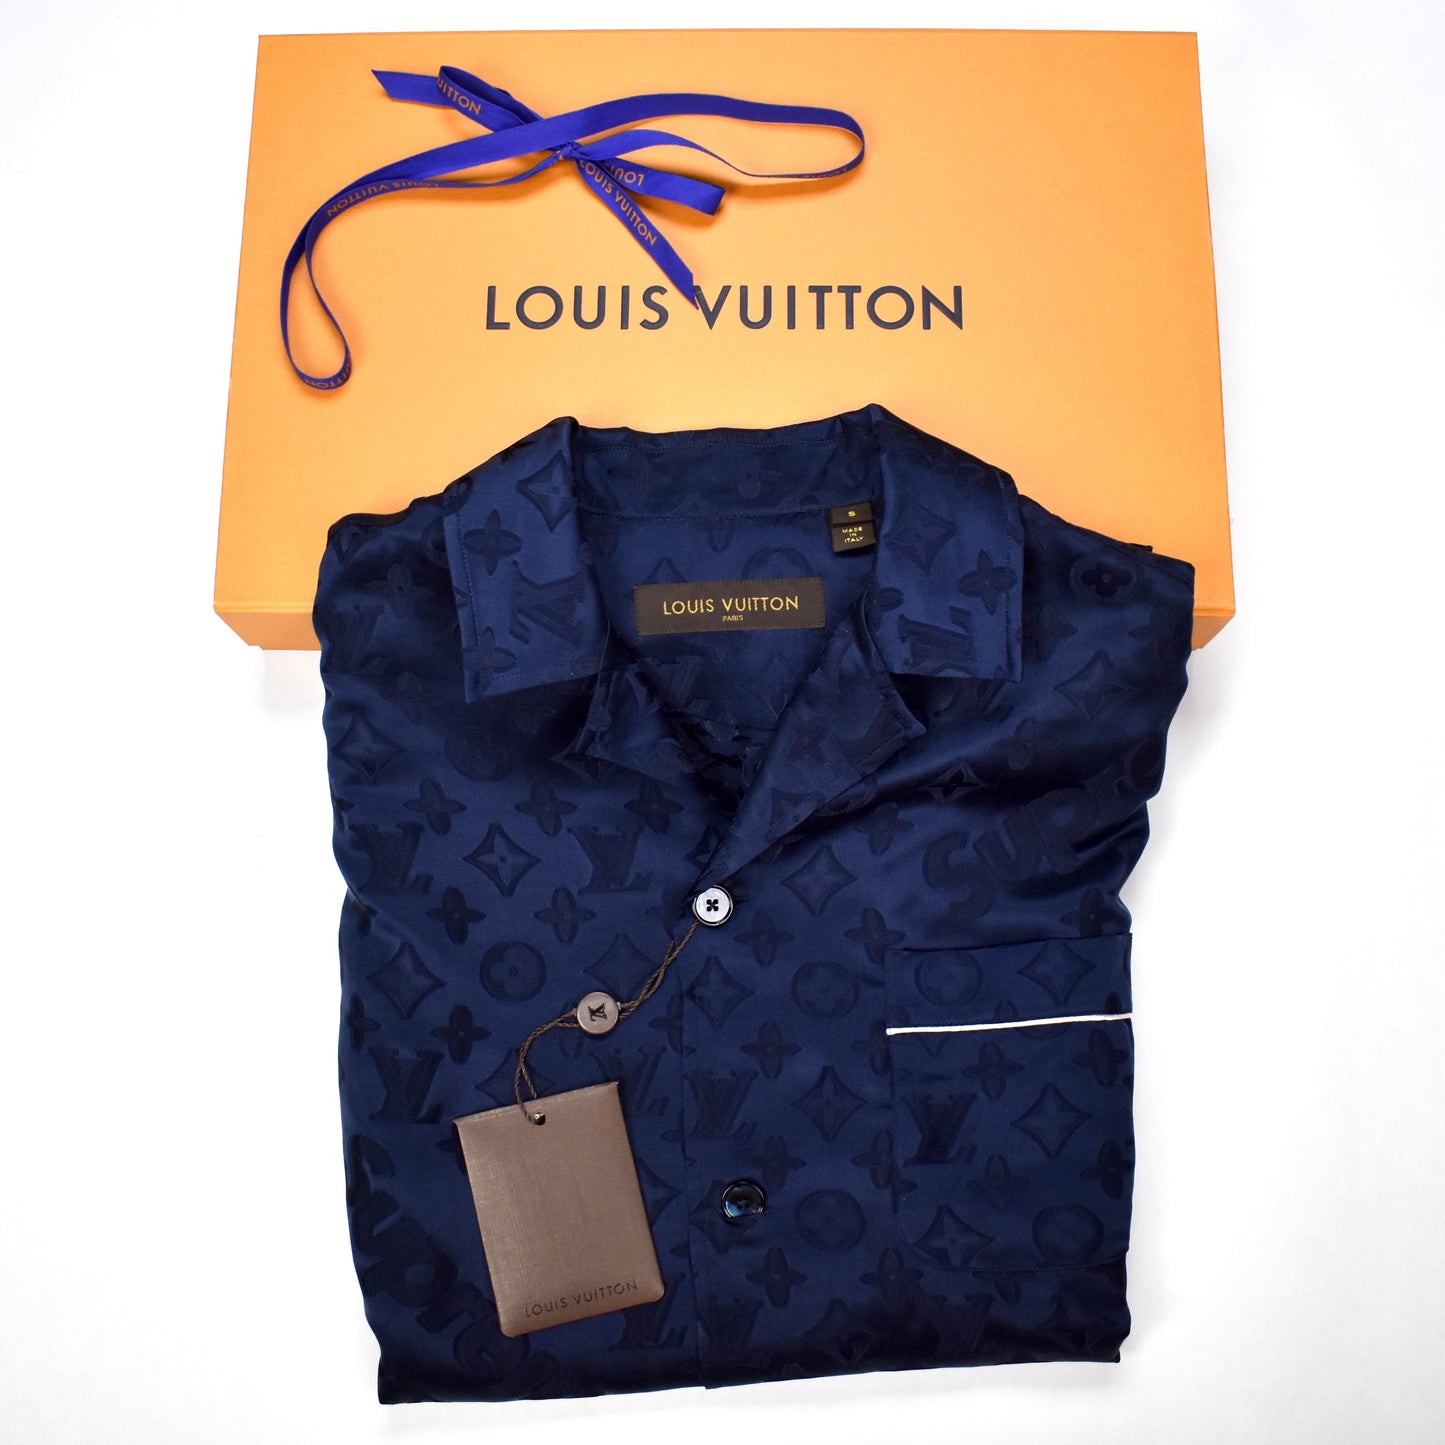 Louis Vuitton Limited Edition Navy Jacquard Monogram Fabric